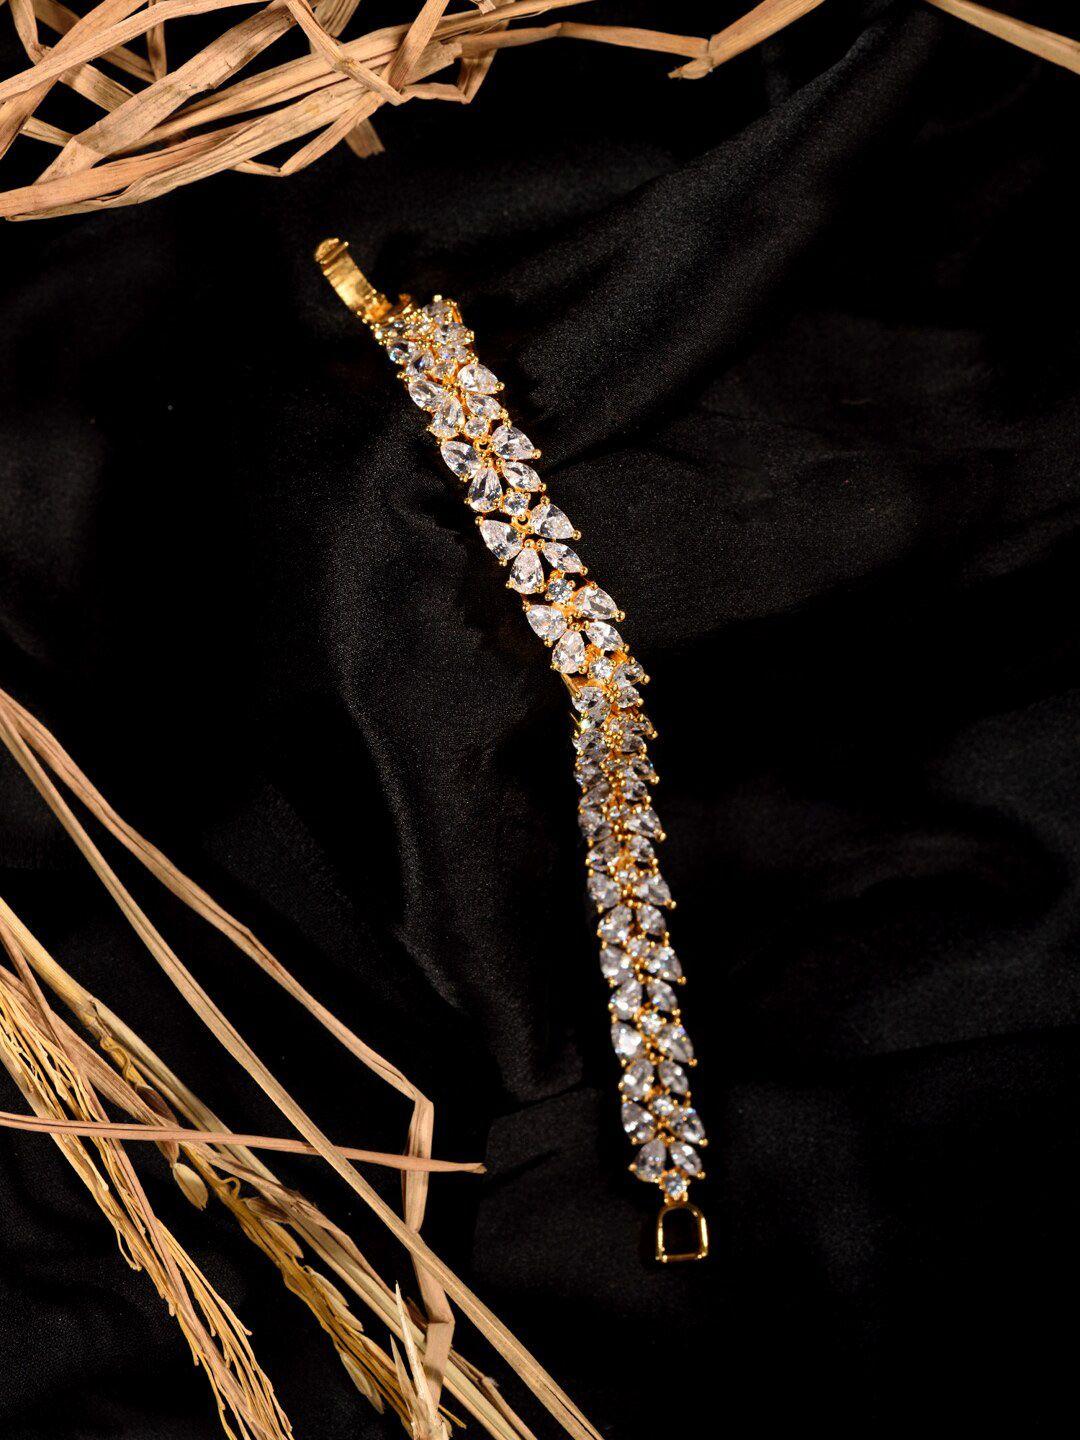 saraf rs jewellery gold-toned & white american diamond studded leaf designed bracelet